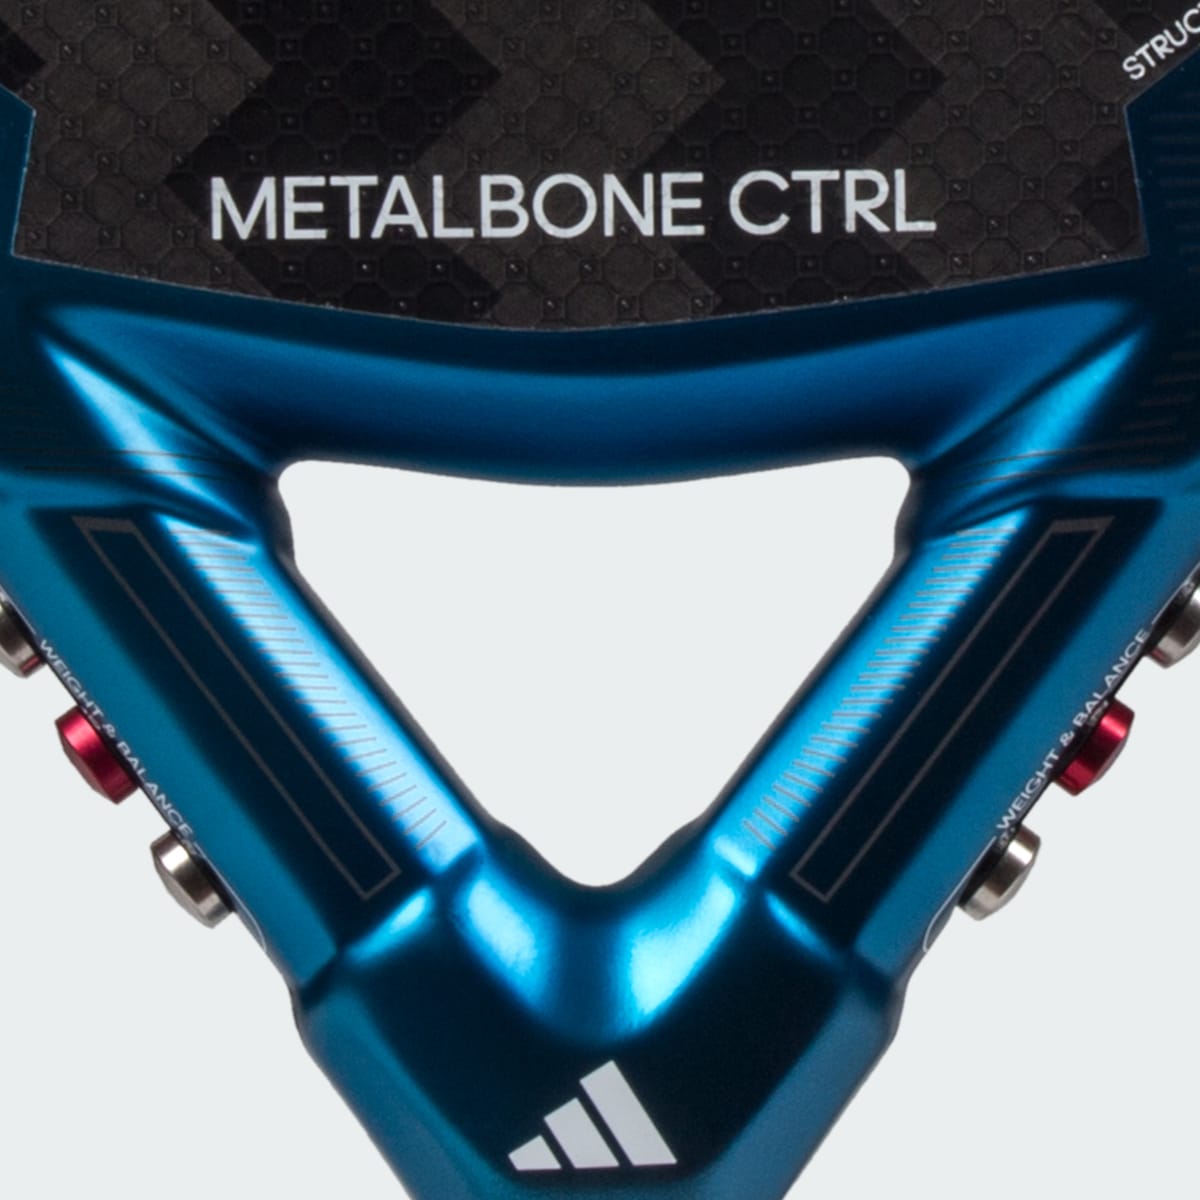 Adidas Raquete de Padel CTRL 3.3 Metalbone. 5